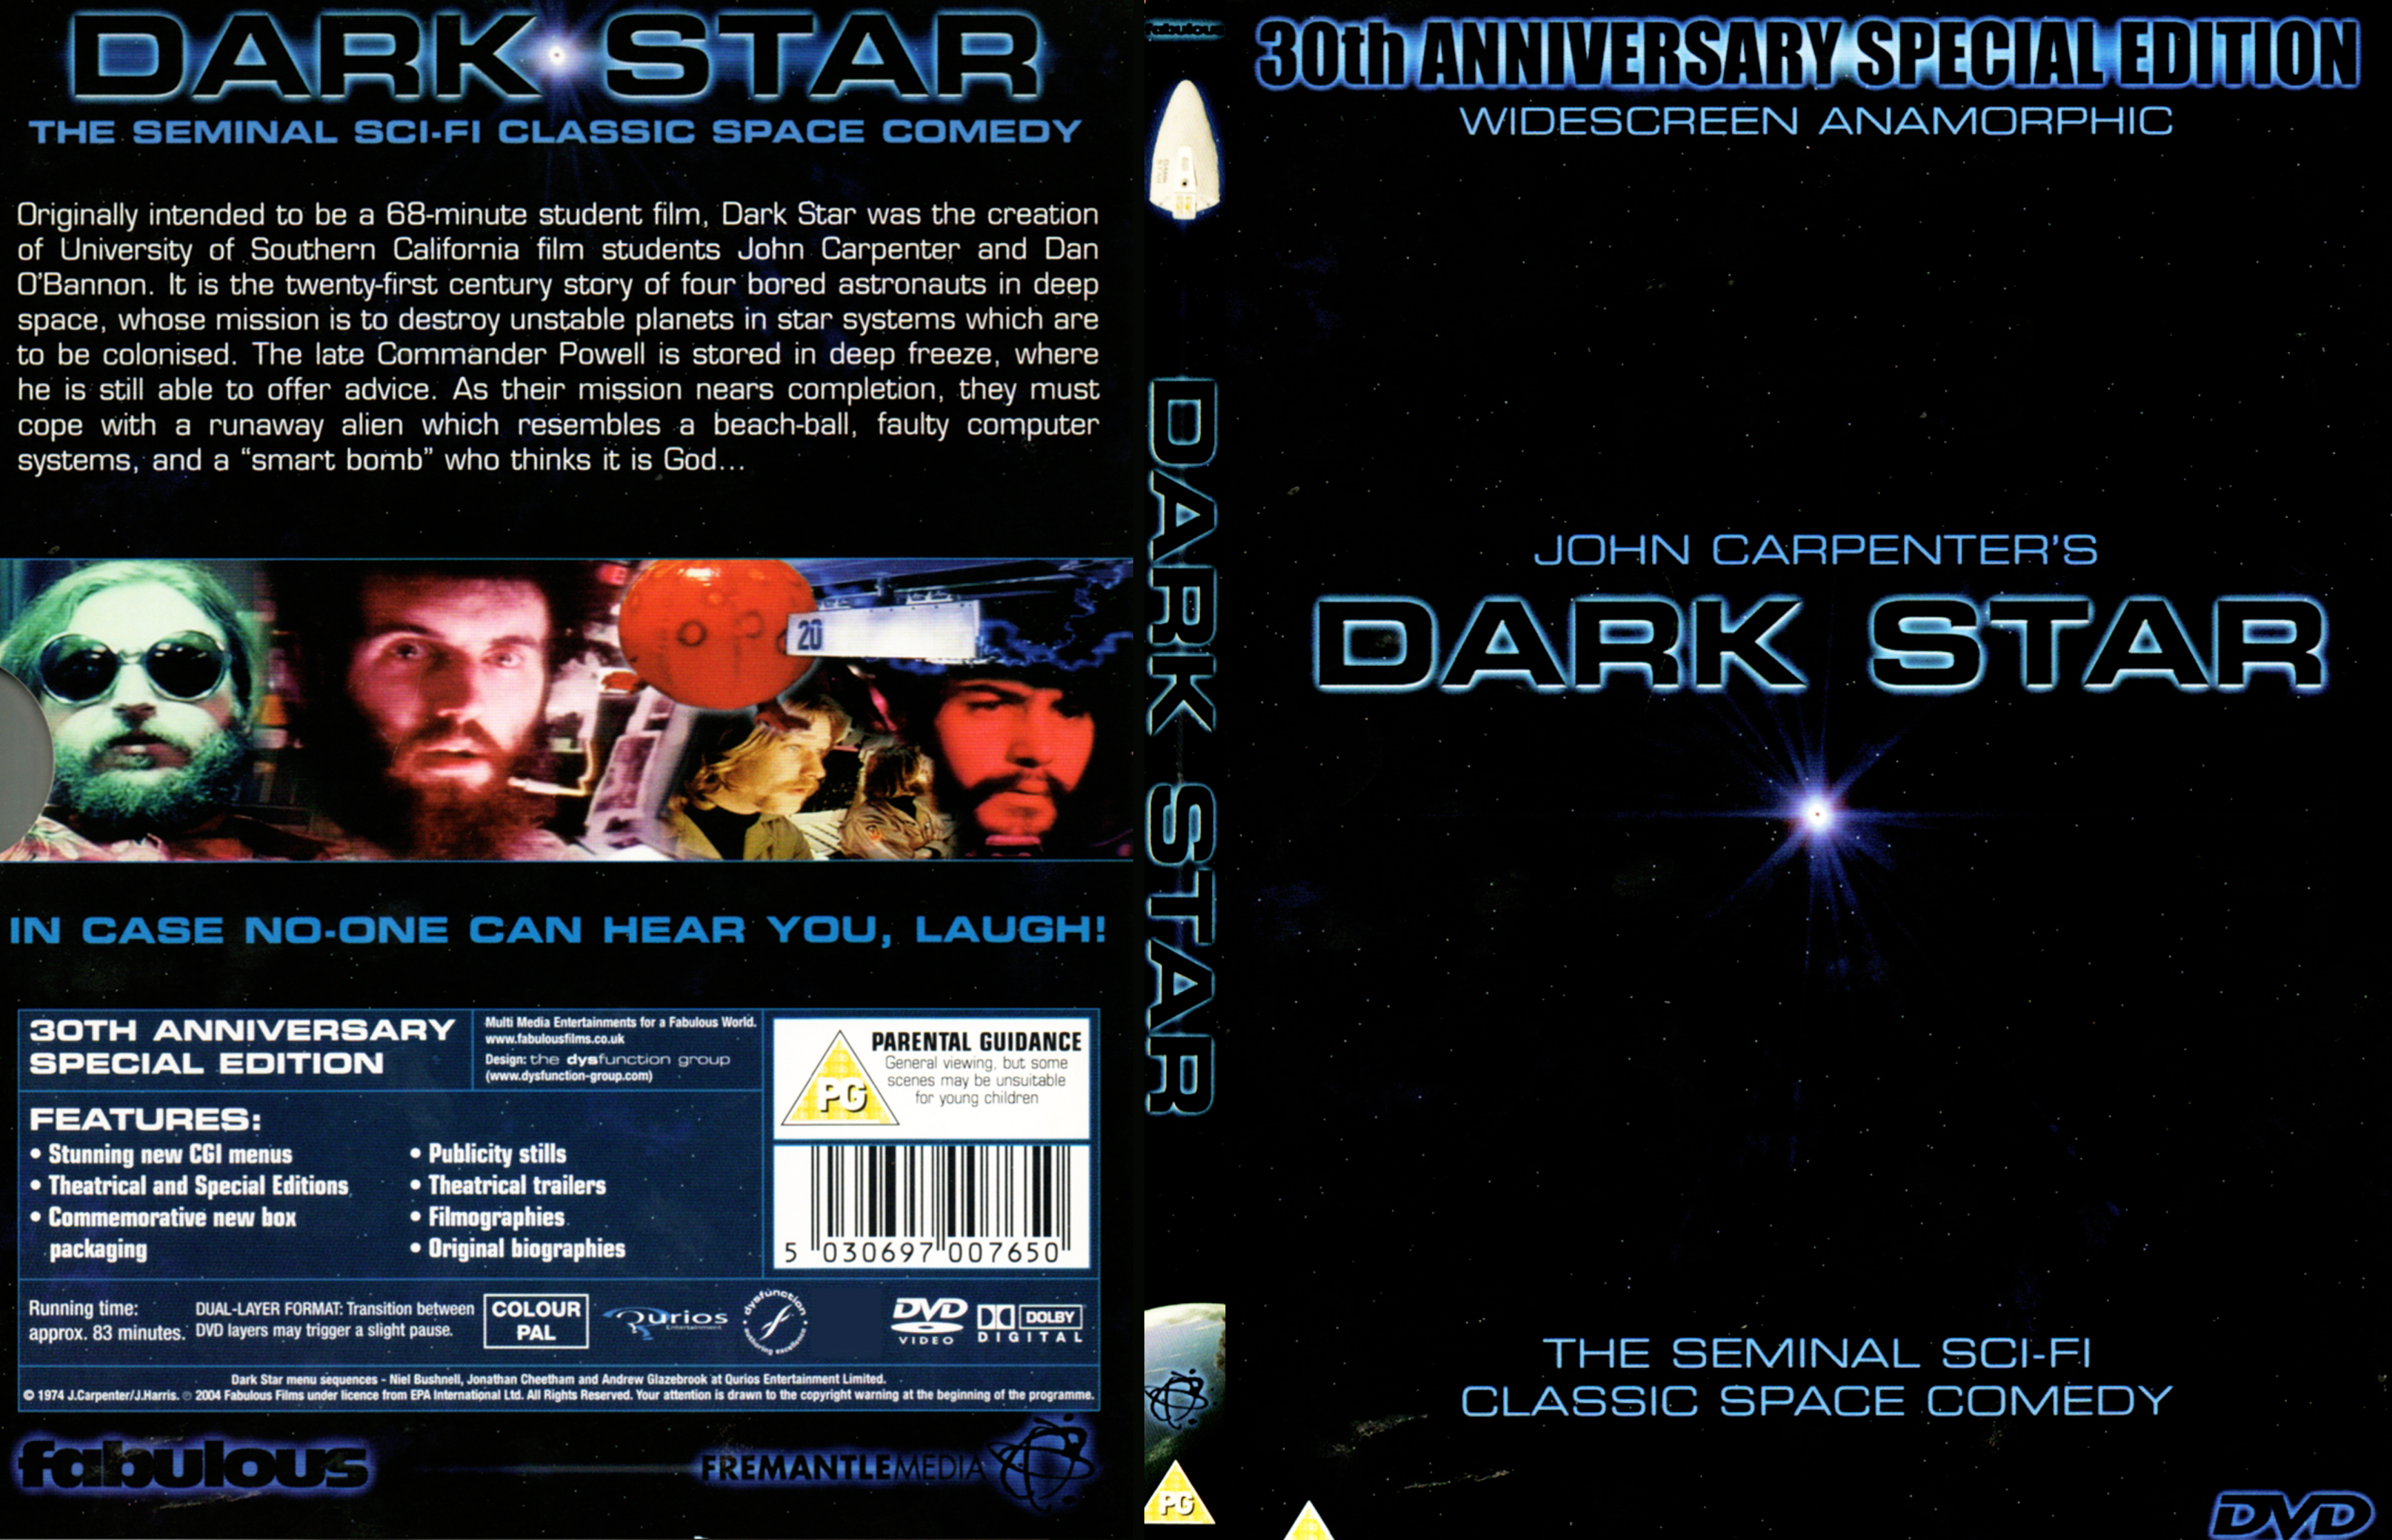 Jaquette DVD Dark star Zone 1 v2